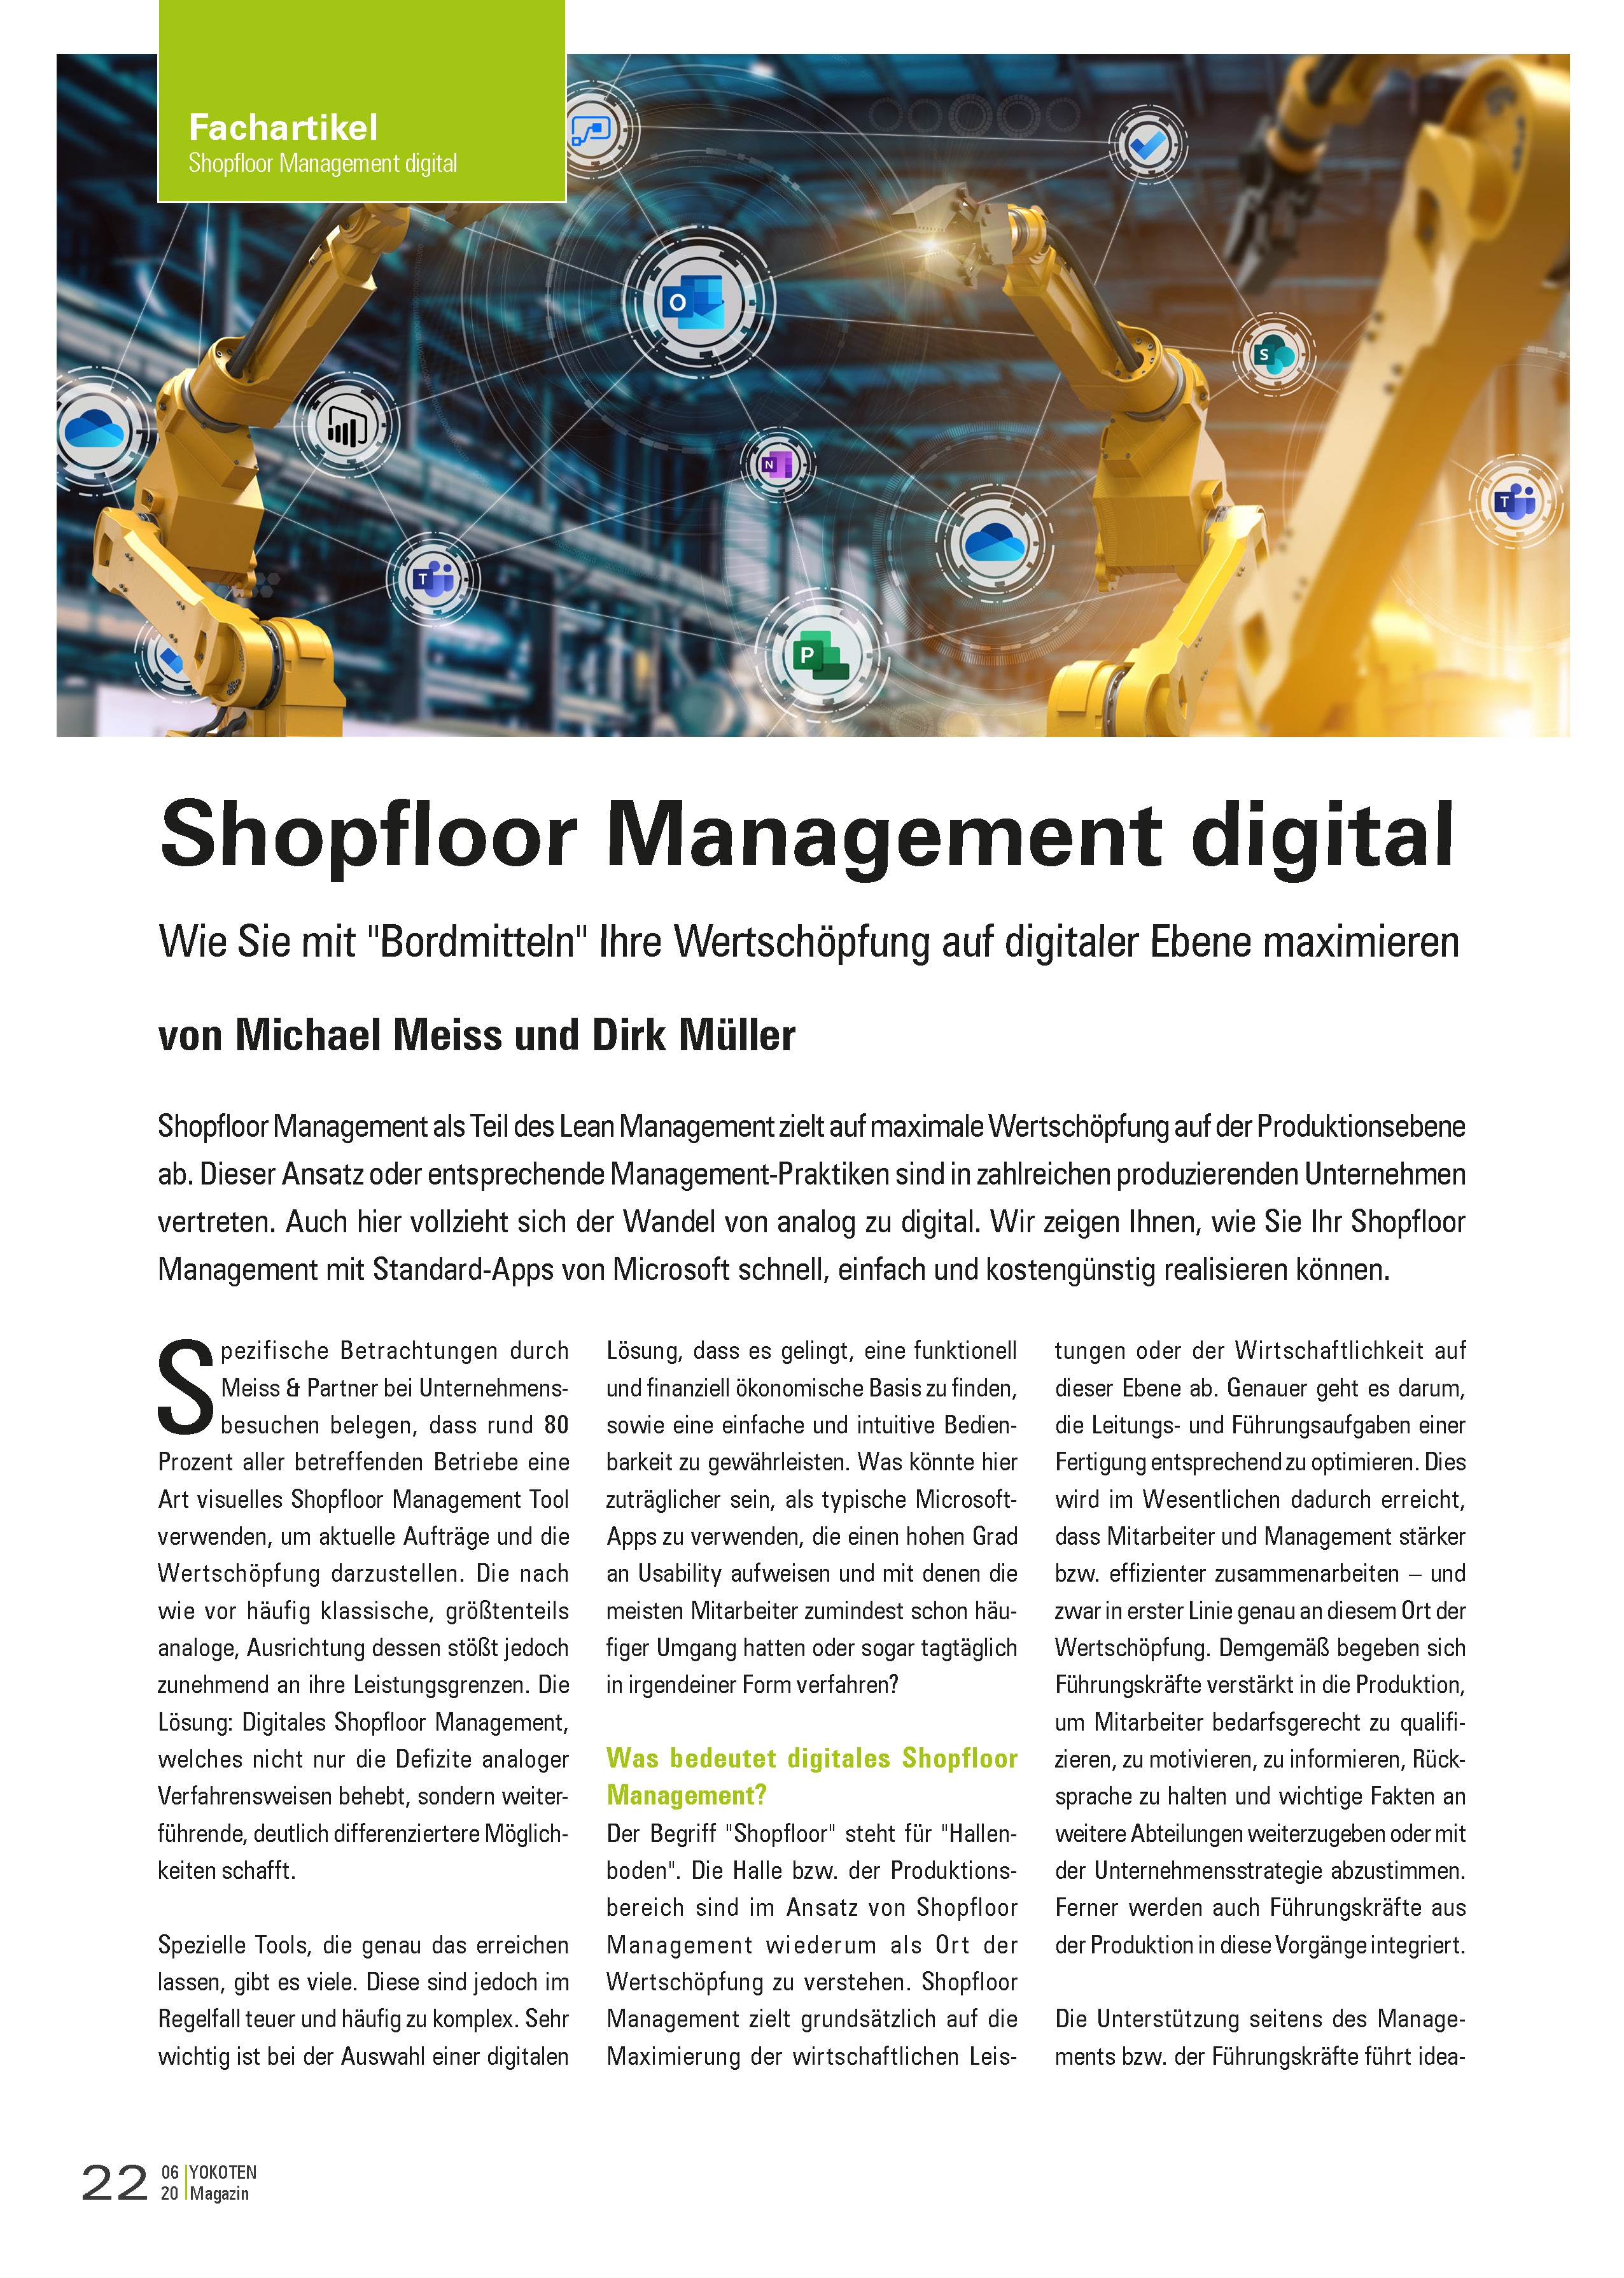 Shopfloor Management digital - Artikel aus Fachmagazin YOKOTEN 2020-06